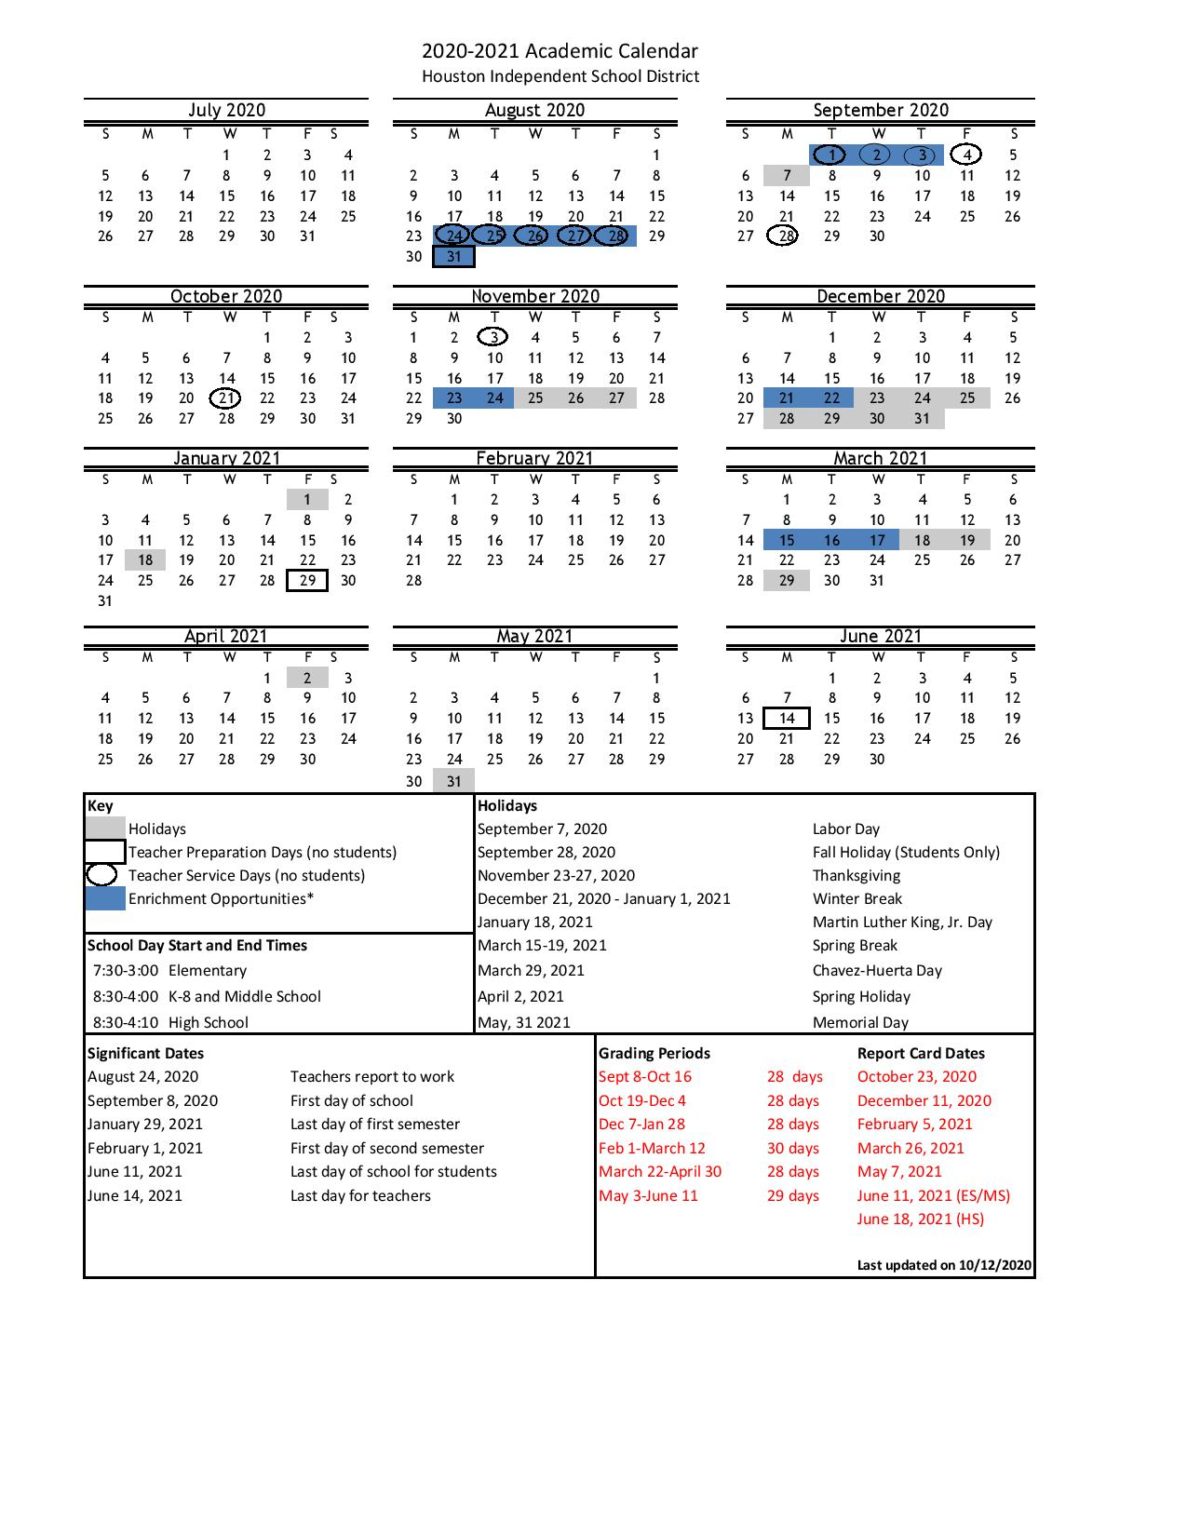 Houston Independent School District Calendar 2020 2021